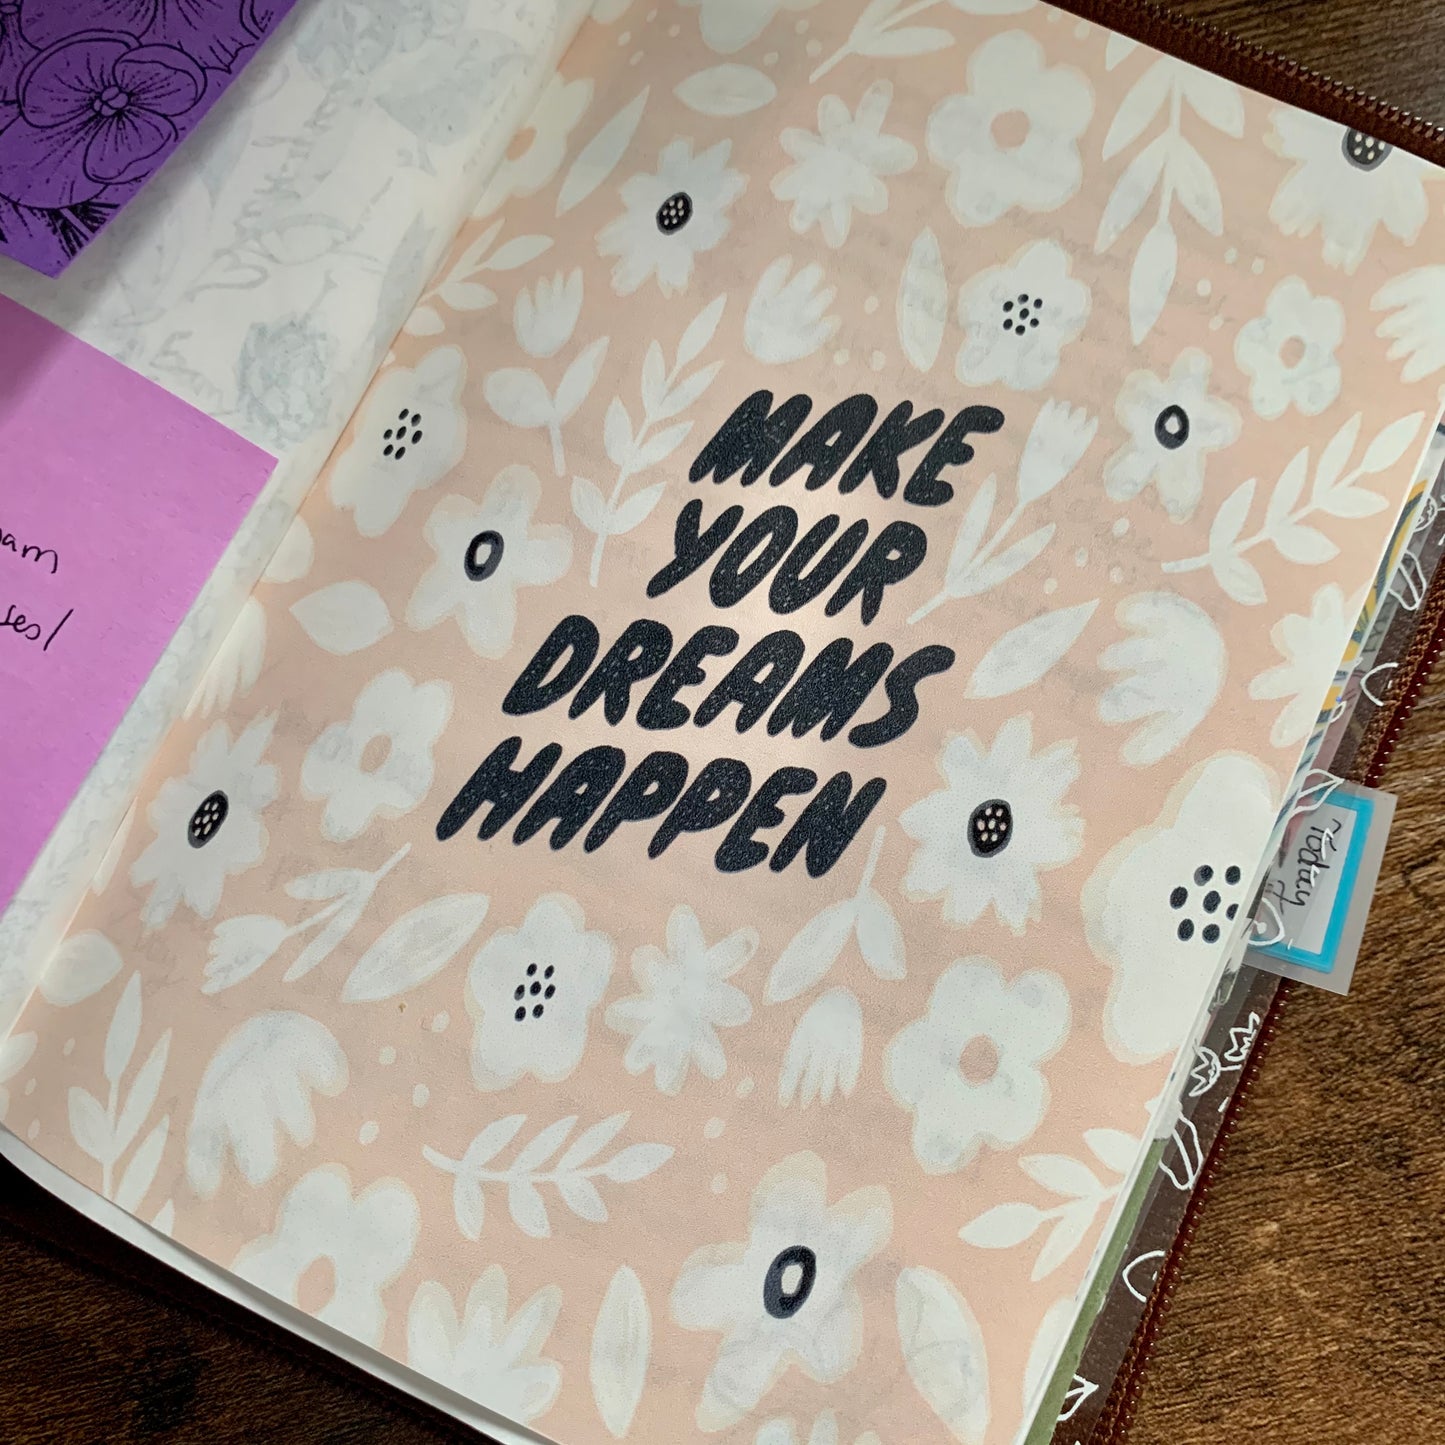 Printed Tomoe River Paper Planner Dashboards- Make your dreams happen